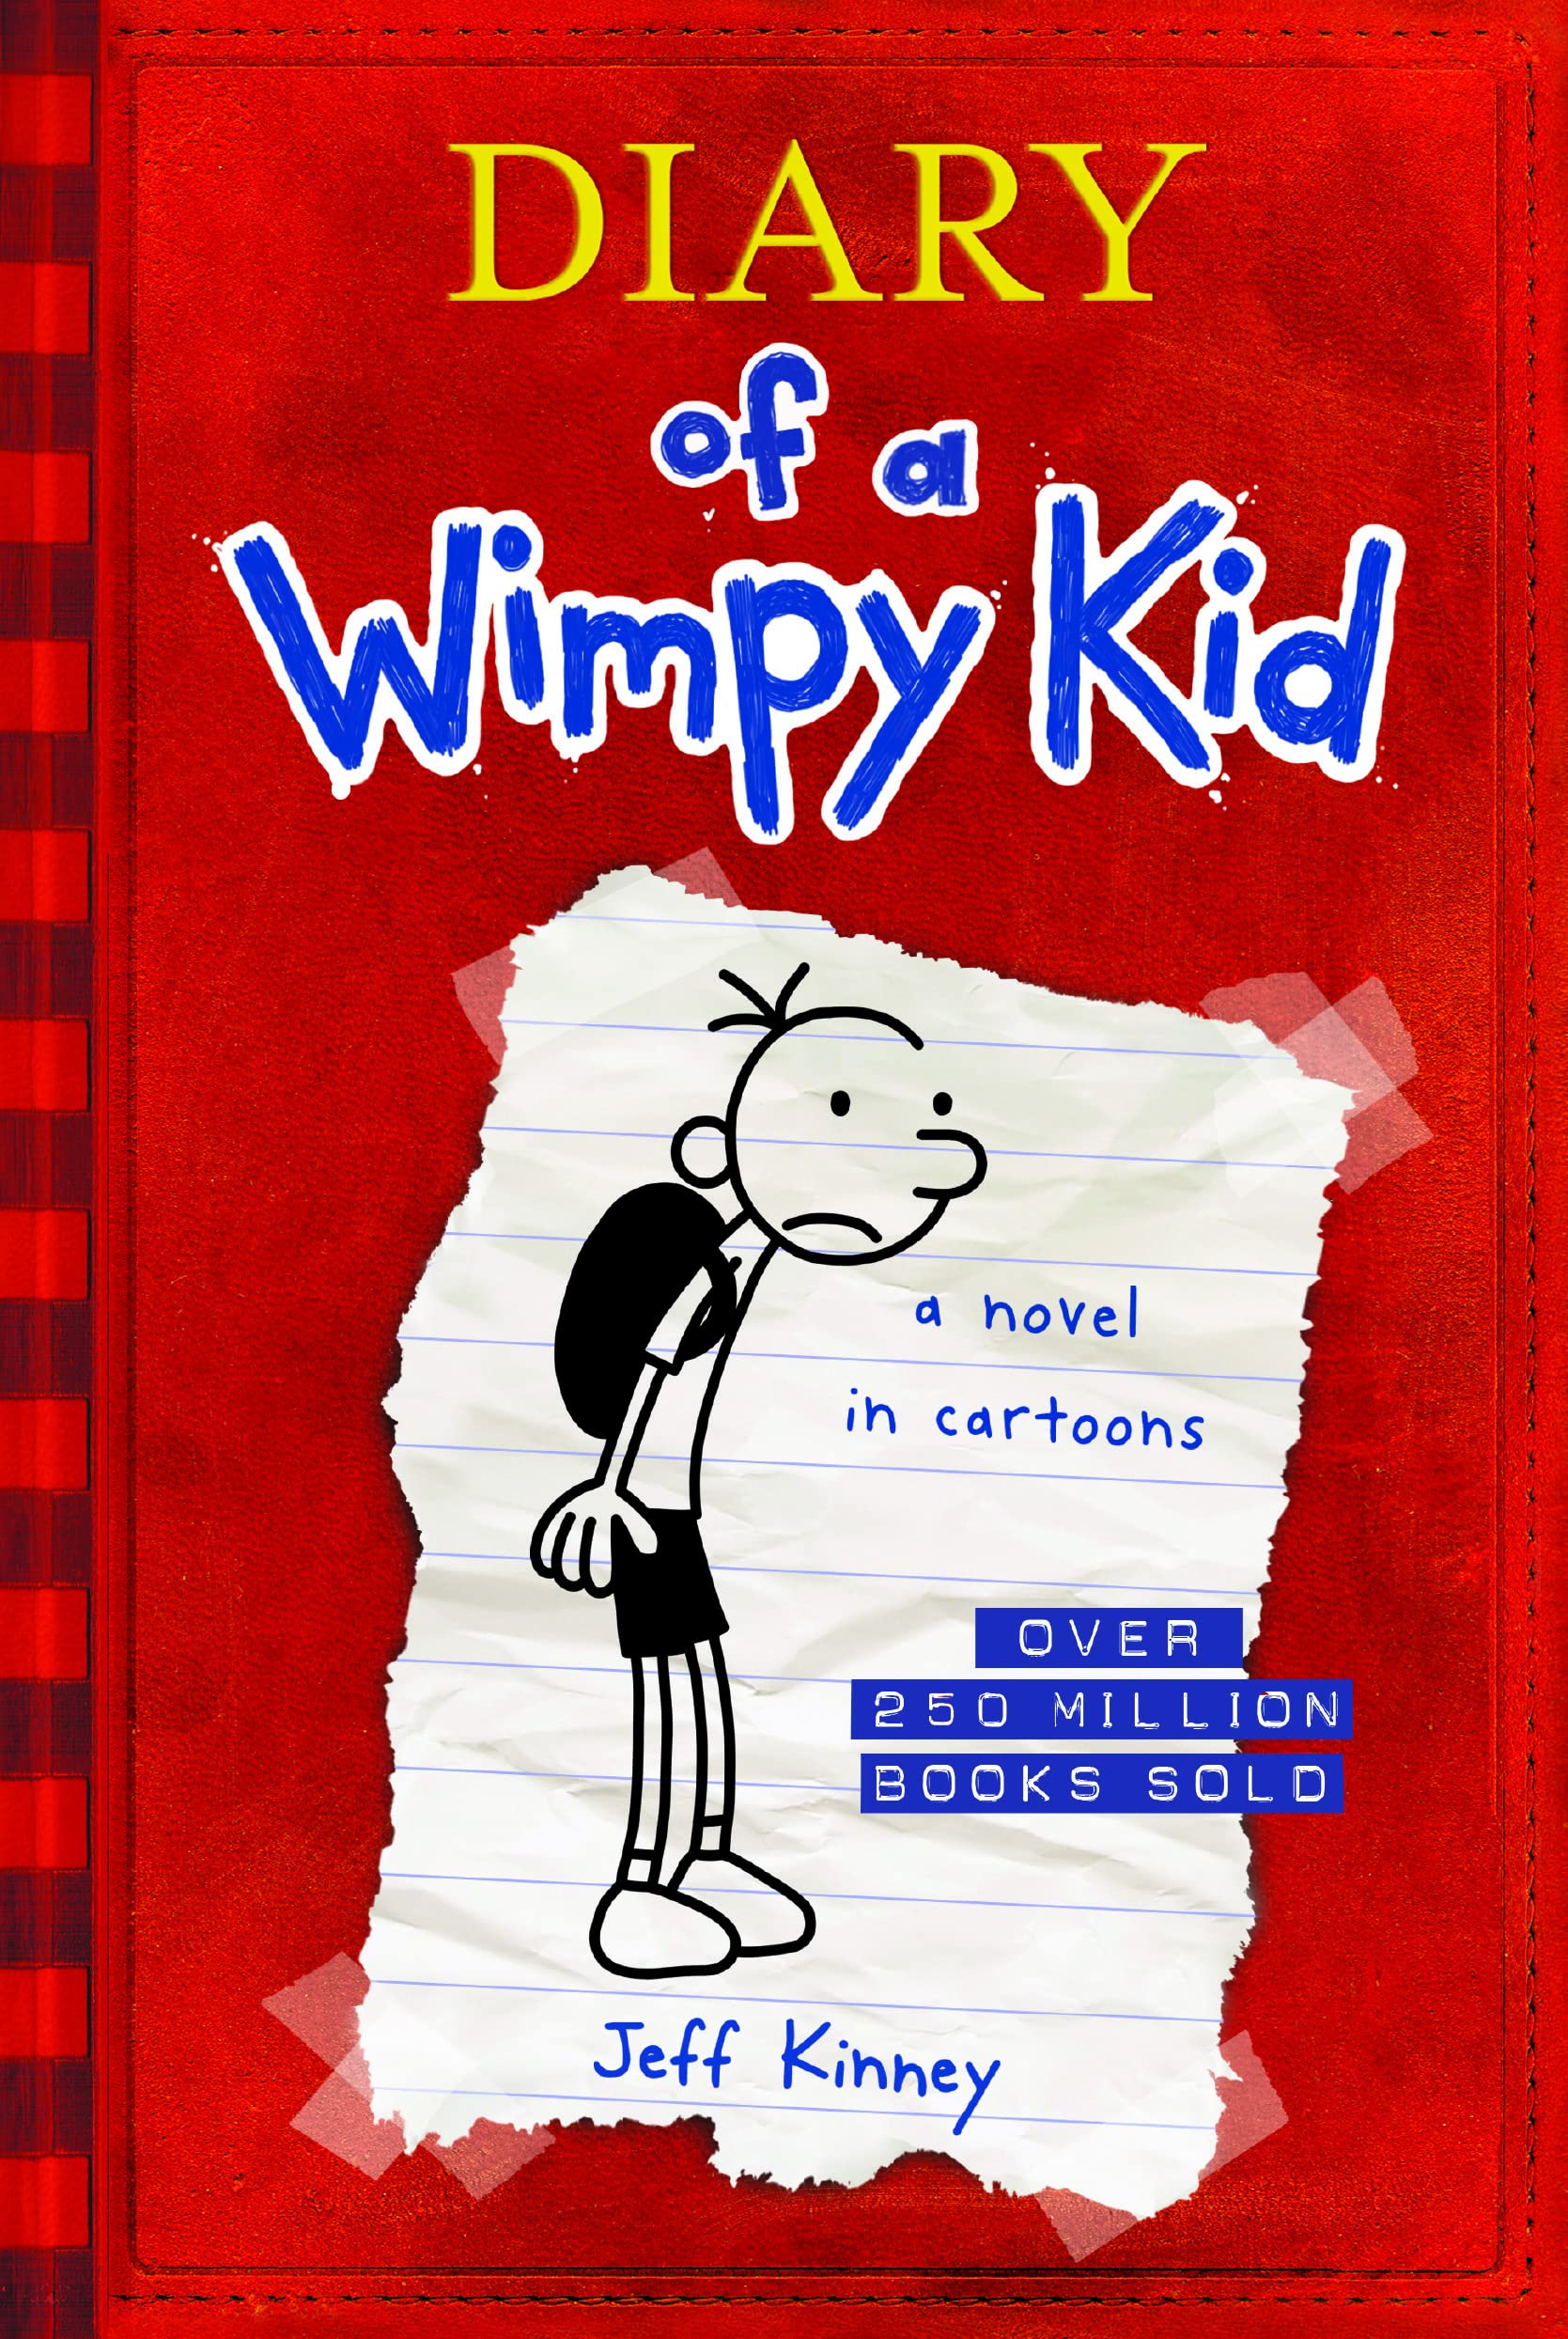 "Diary of a Wimpy Kid" by Jeff Kinney